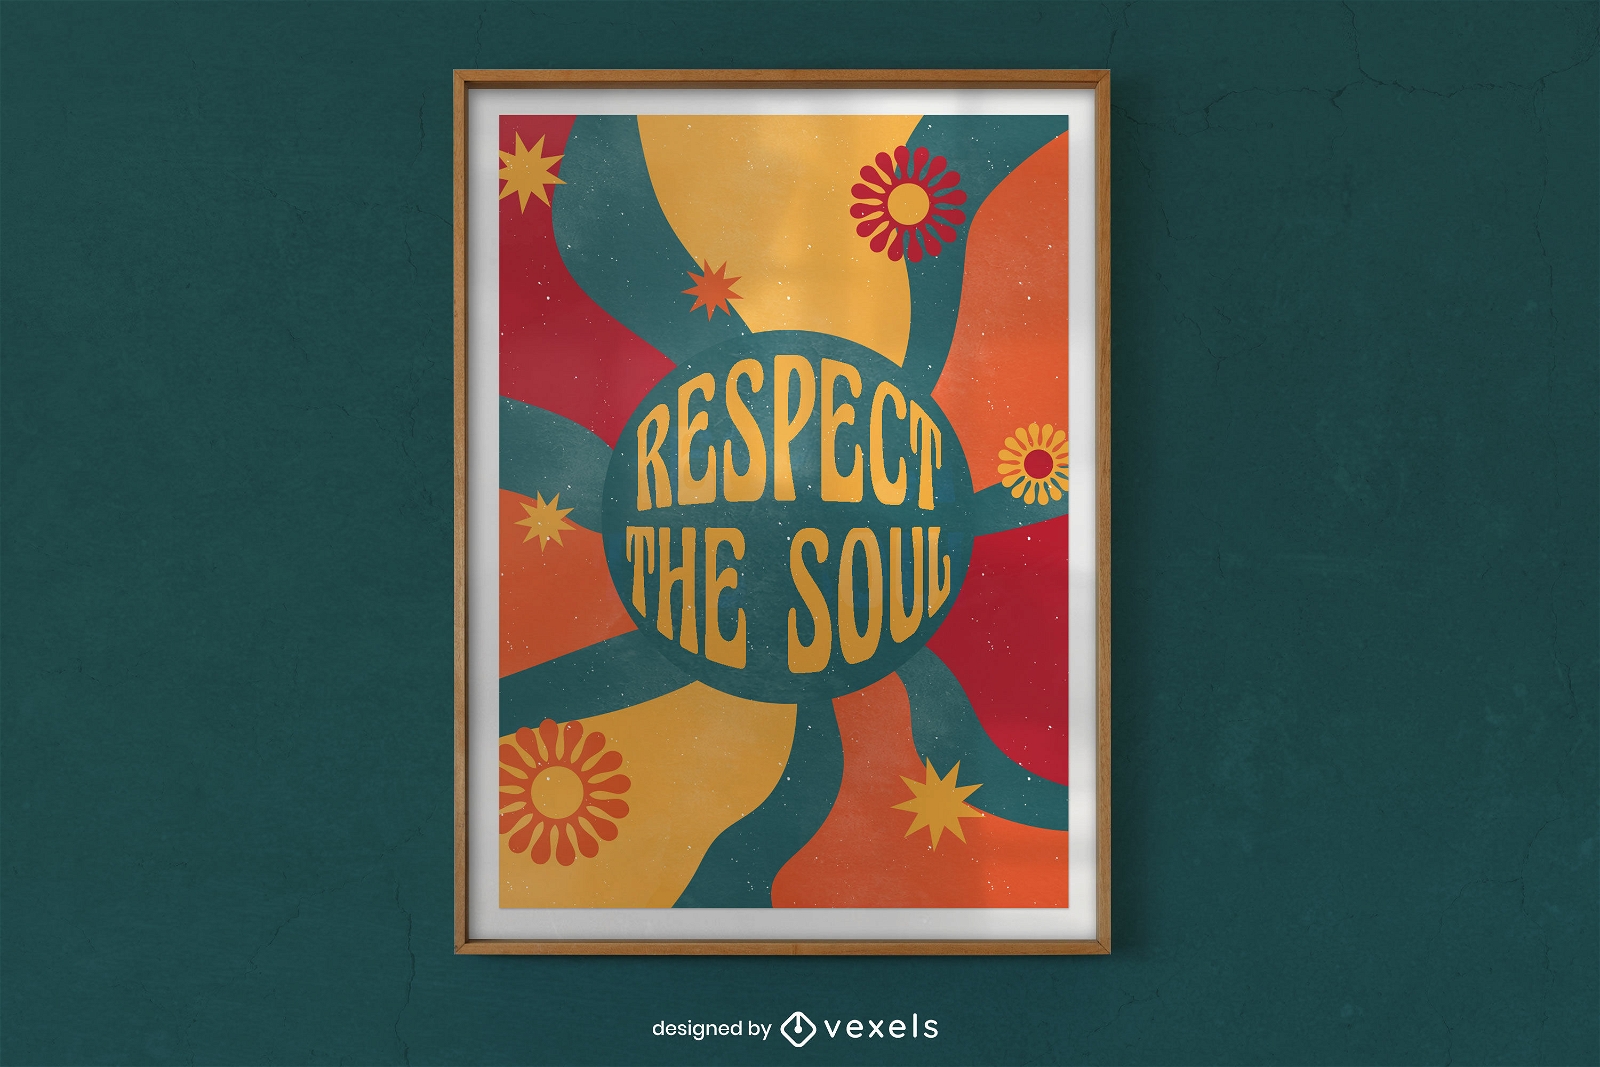 Hippie soul quote poster design